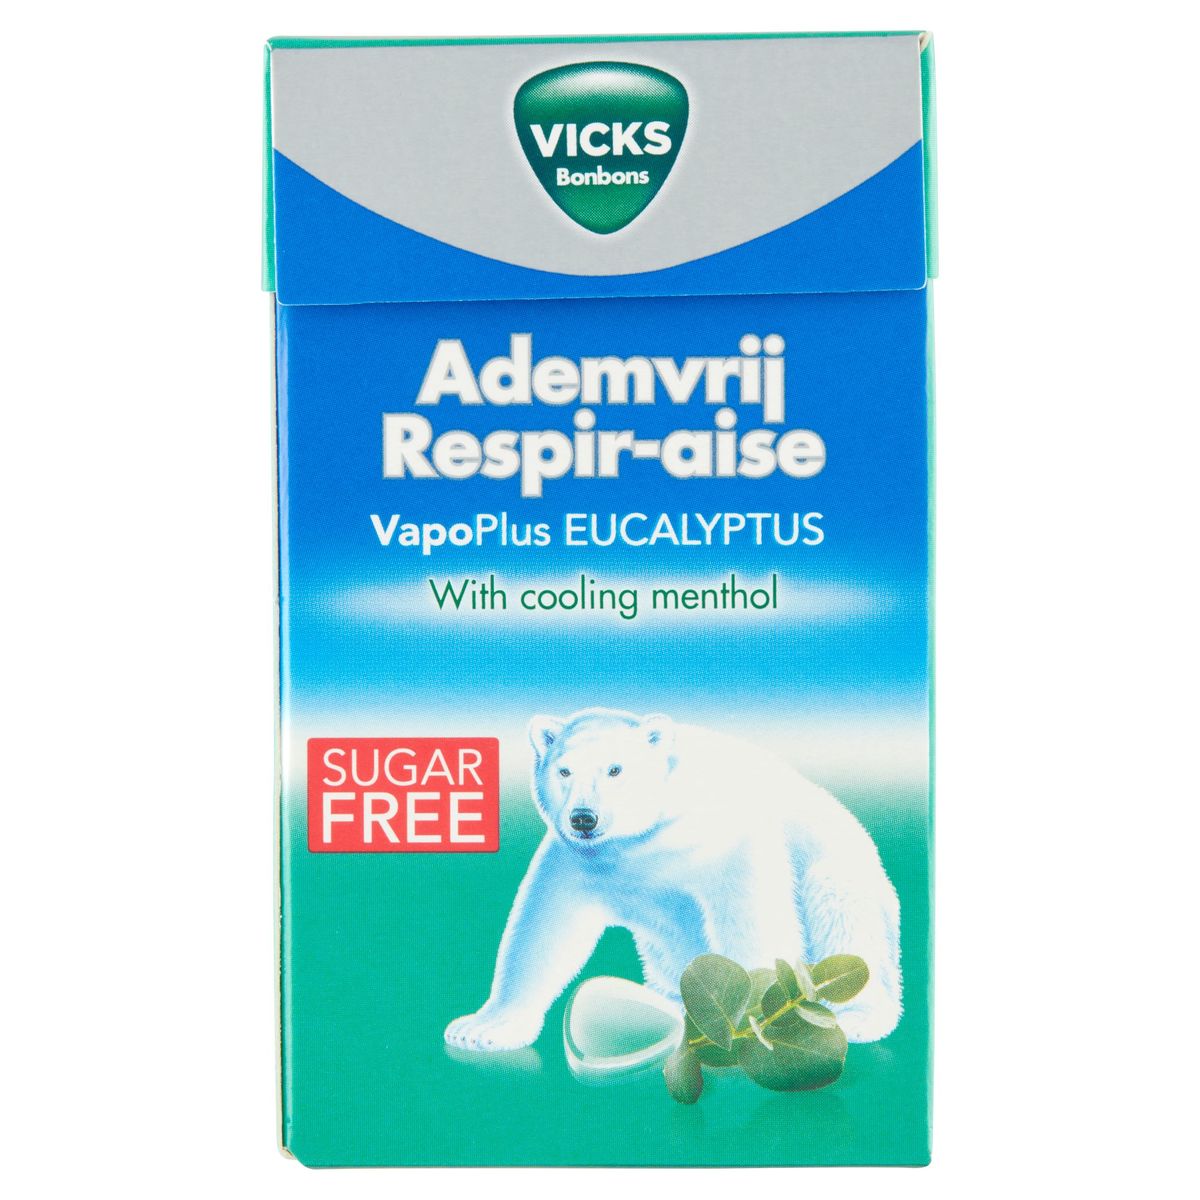 Vicks Bonbons Respir-Aise VapoPlus Eucalyptus Sugar Free 40 g